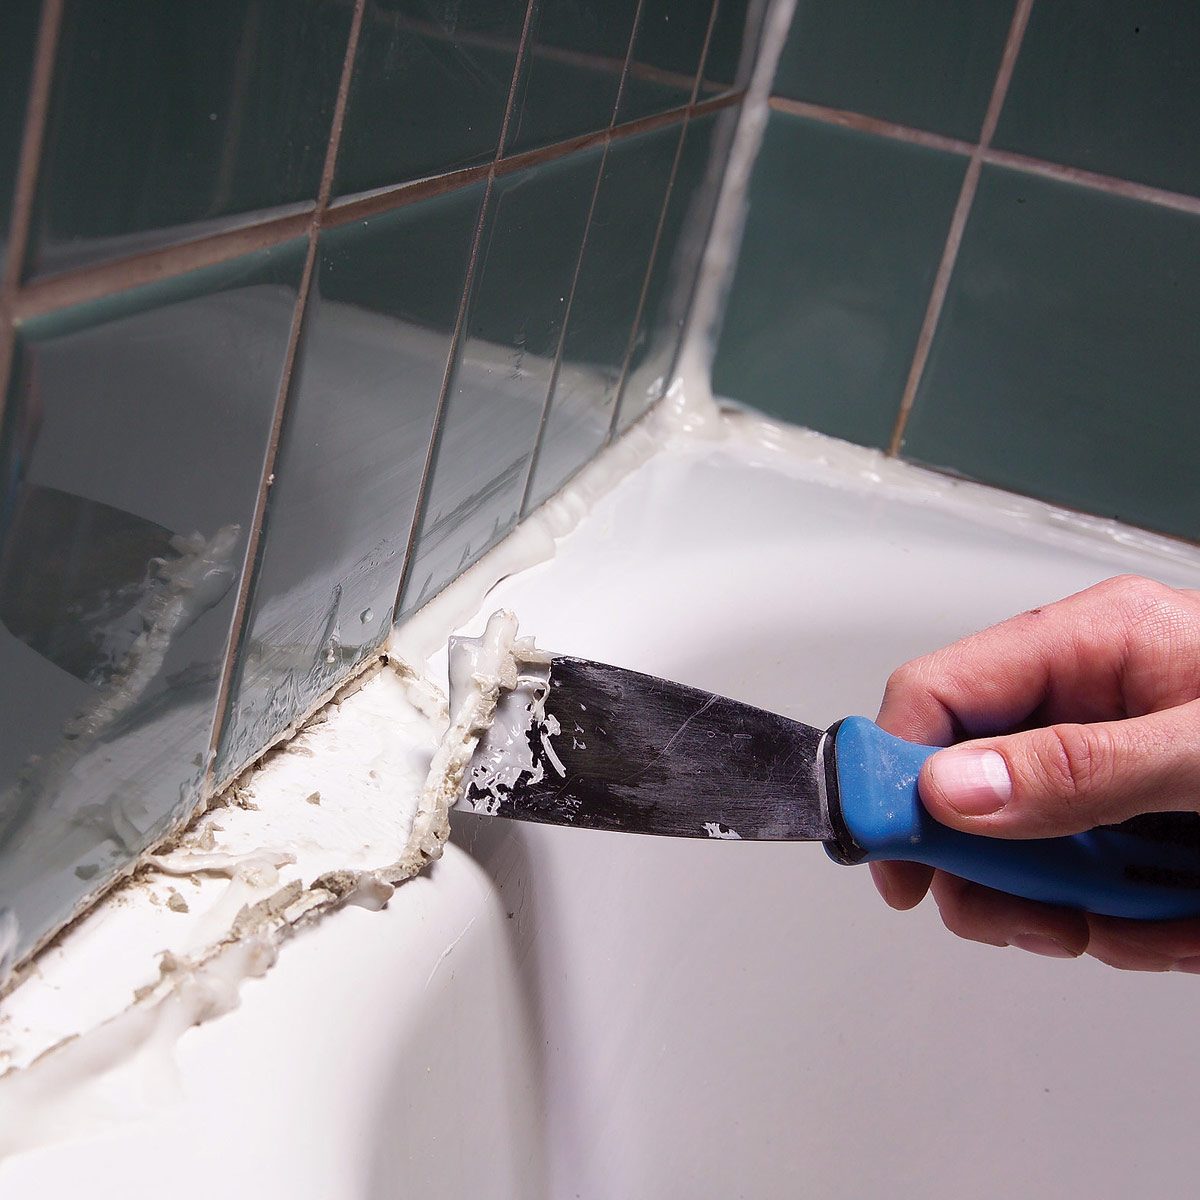 How to Remove Caulk From Tub The Family Handyman